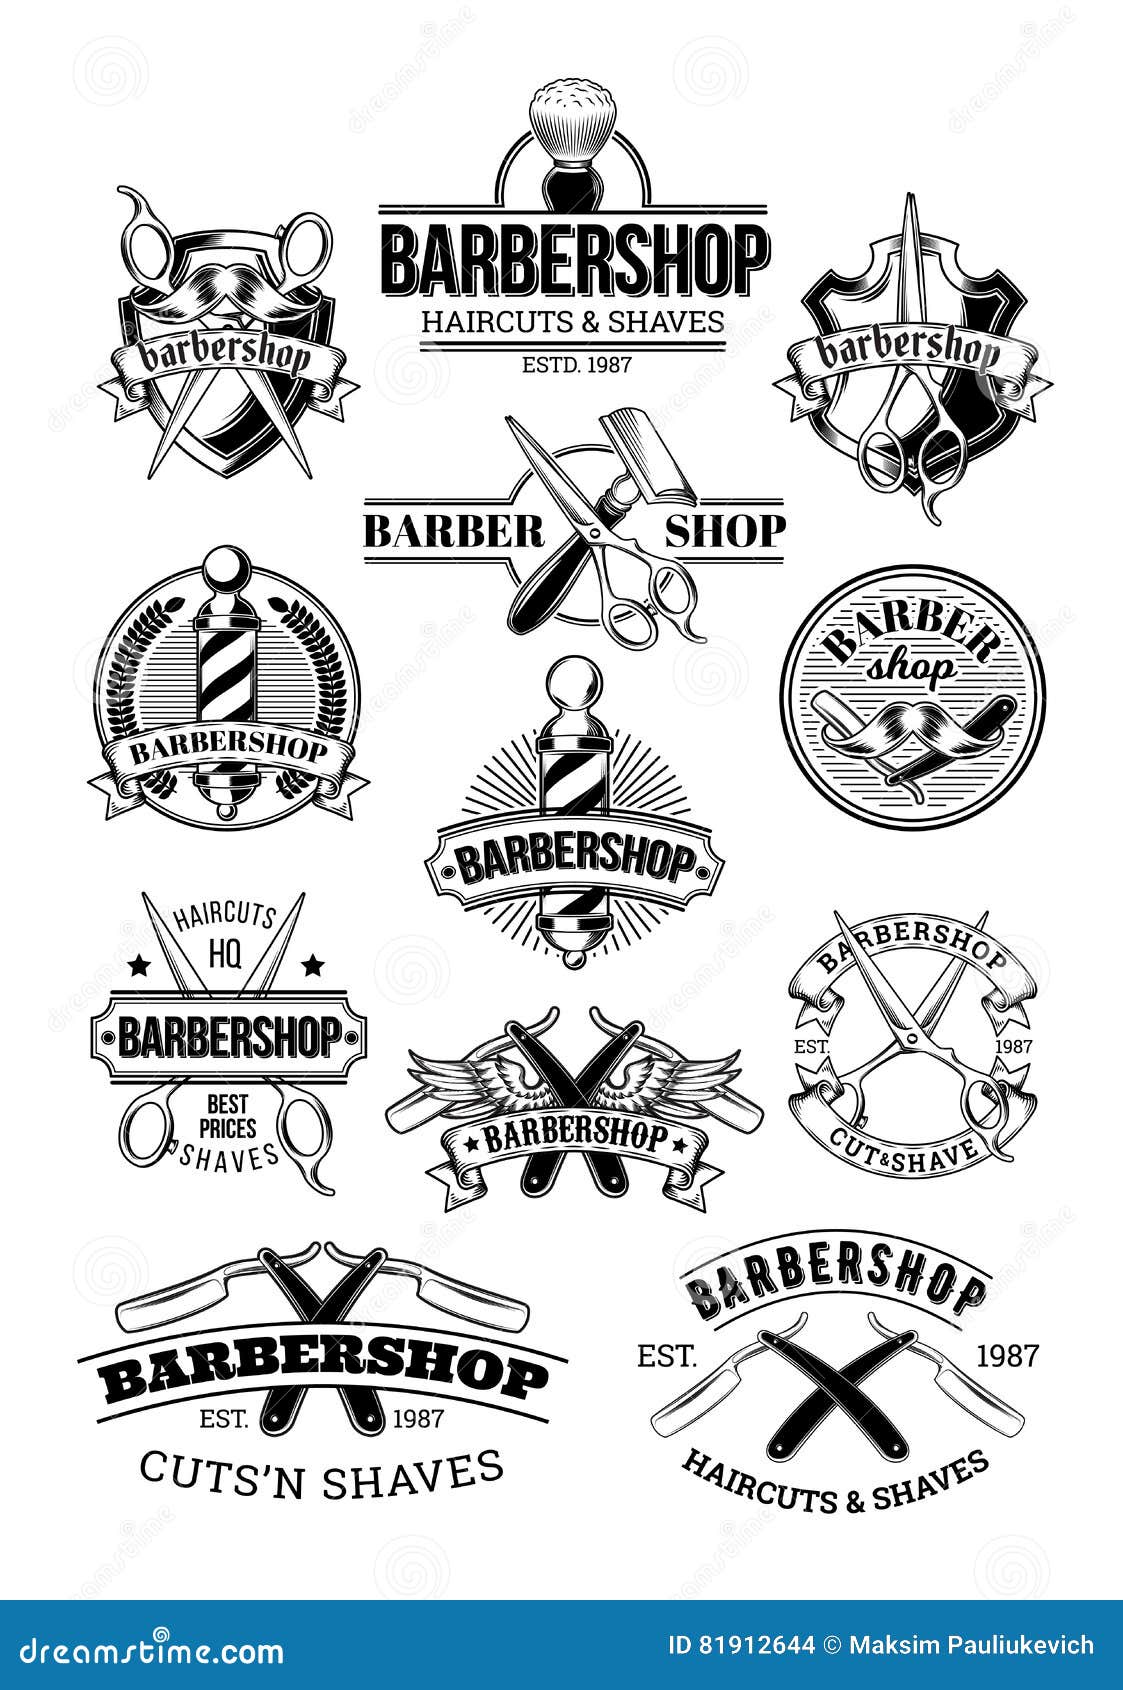  set of barbershop logos, signage